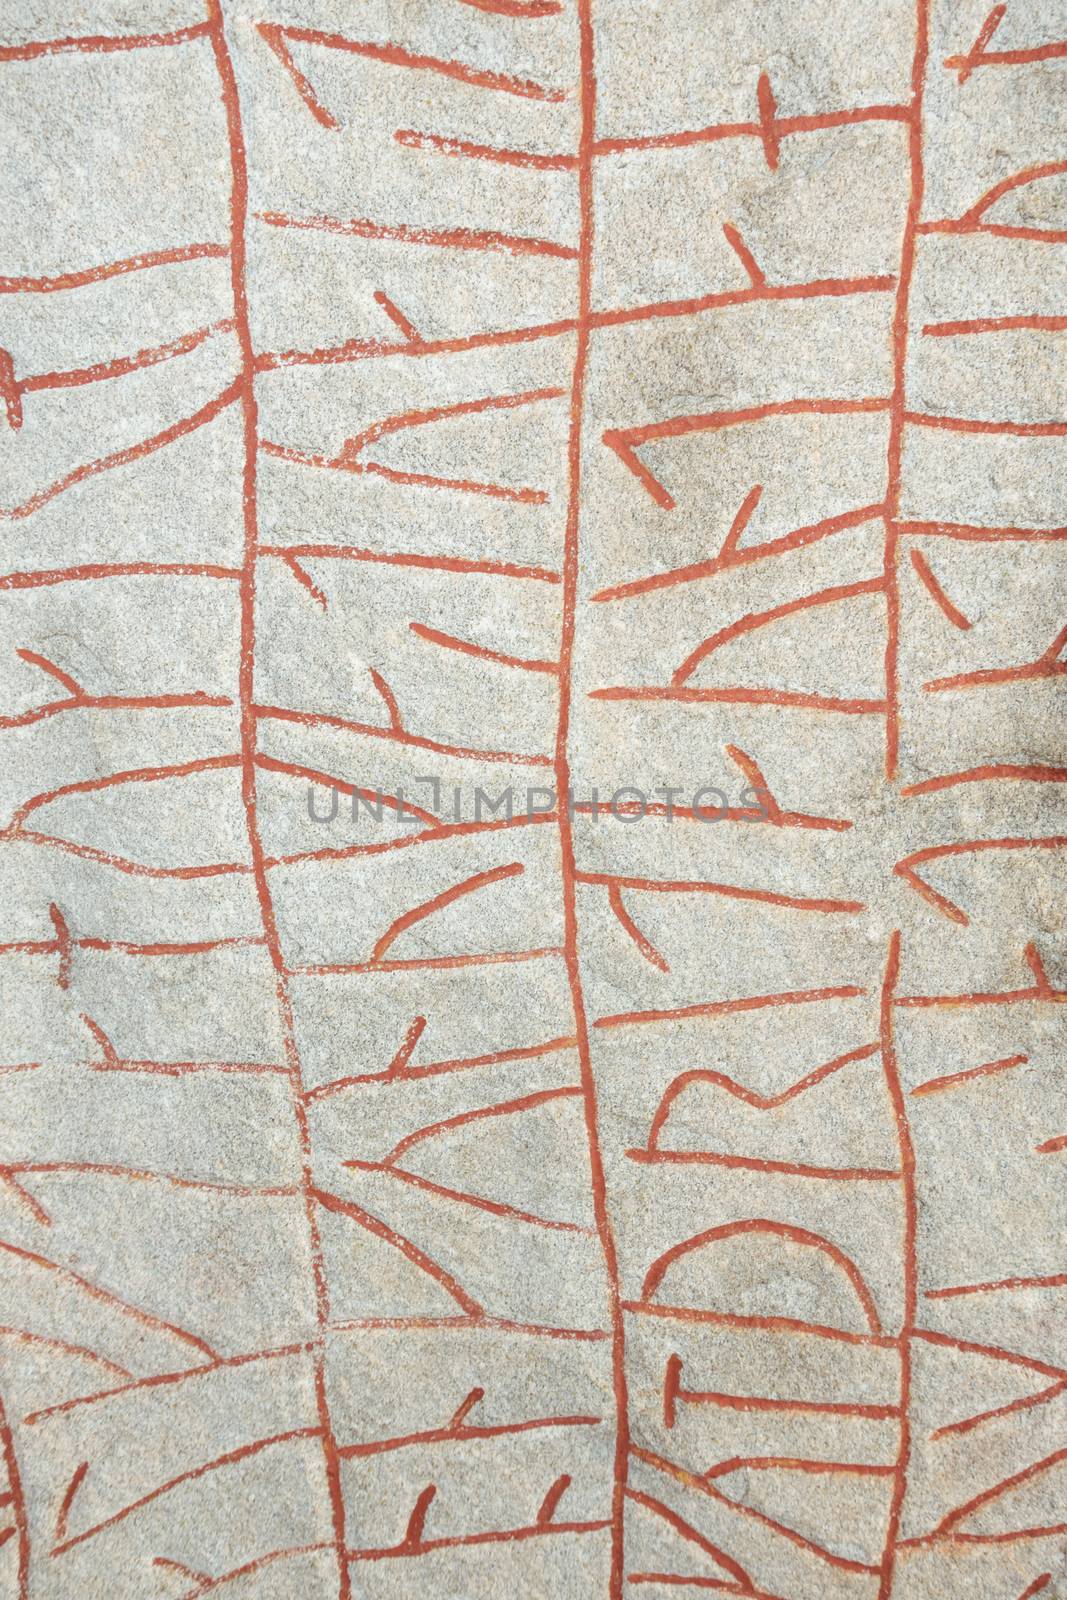 Red rune inscription on the Rok runestone